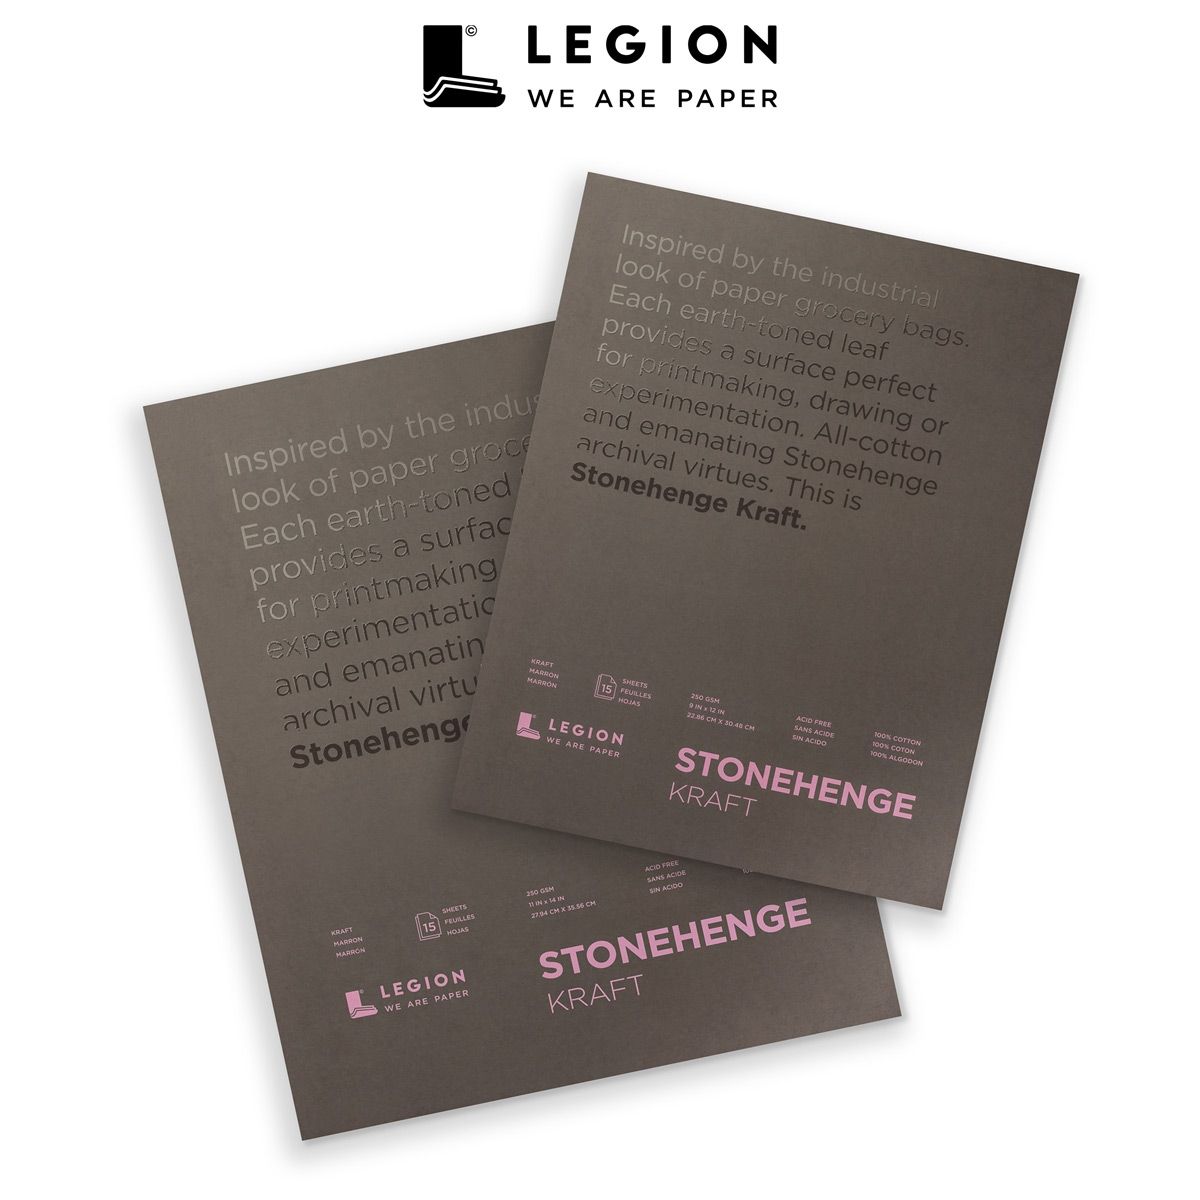 15 Sheets L21 STP250KR912 Kraft Paper 9 X 12 inches Legion Stonehenge Pad 